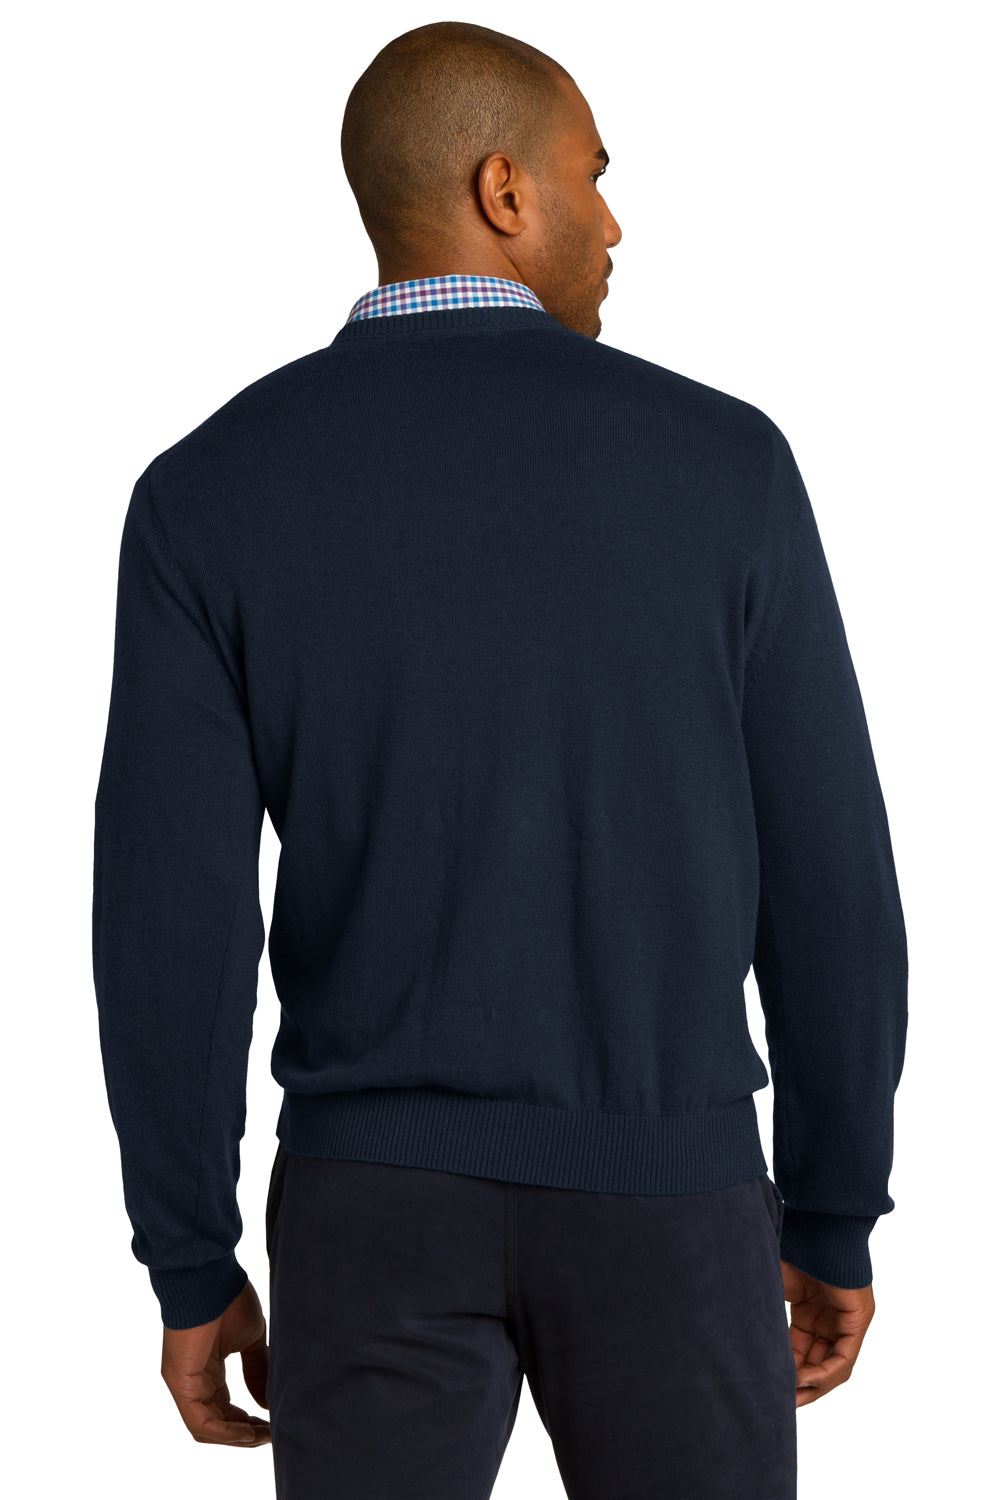 Port Authority SW285 Mens Long Sleeve V-Neck Sweater Navy Blue Back